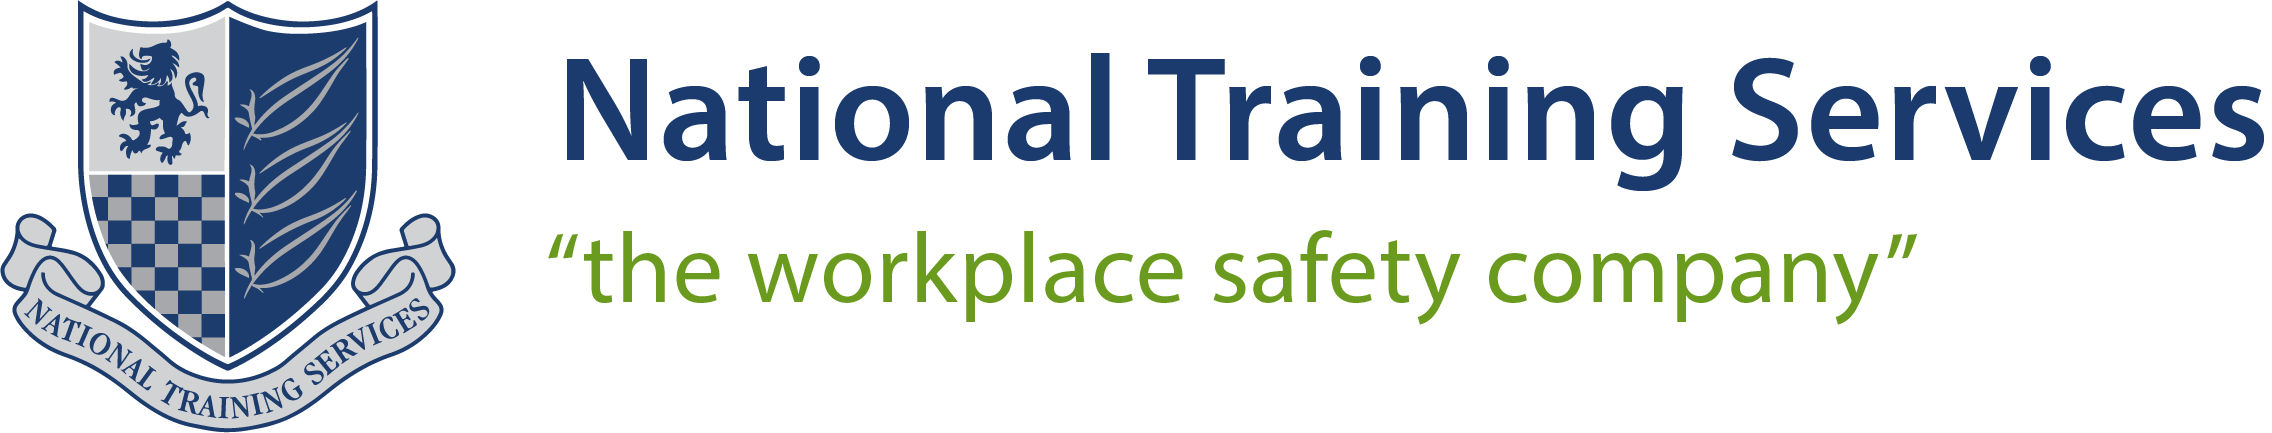 National Training Services Logo